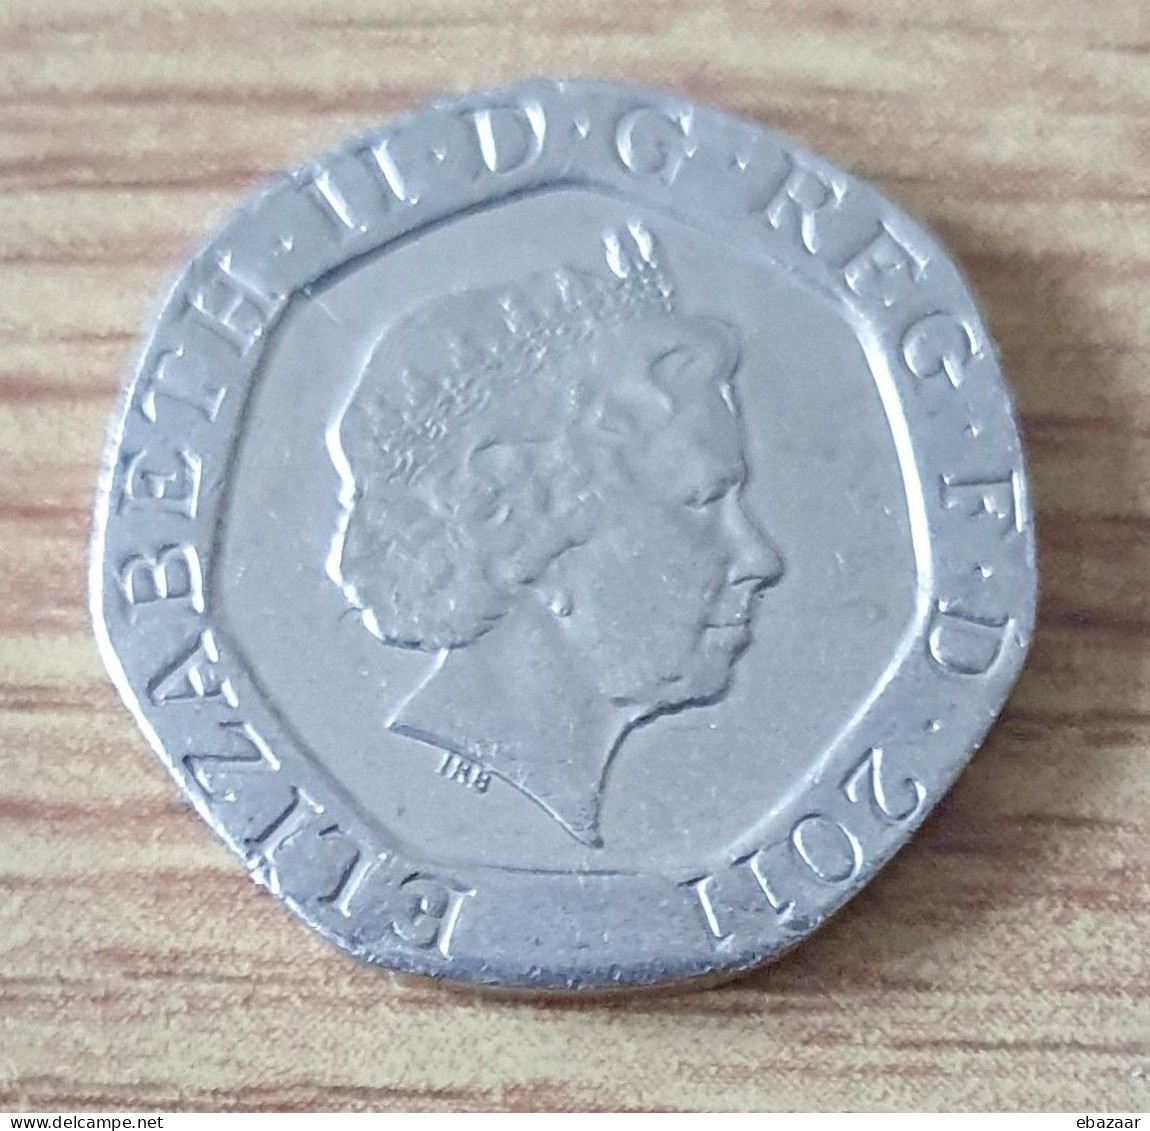 Great Britain 2011 United Kingdom Of England H.M. Queen Elizabeth II - Twenty 20 Pence Coin UK GB - 20 Pence